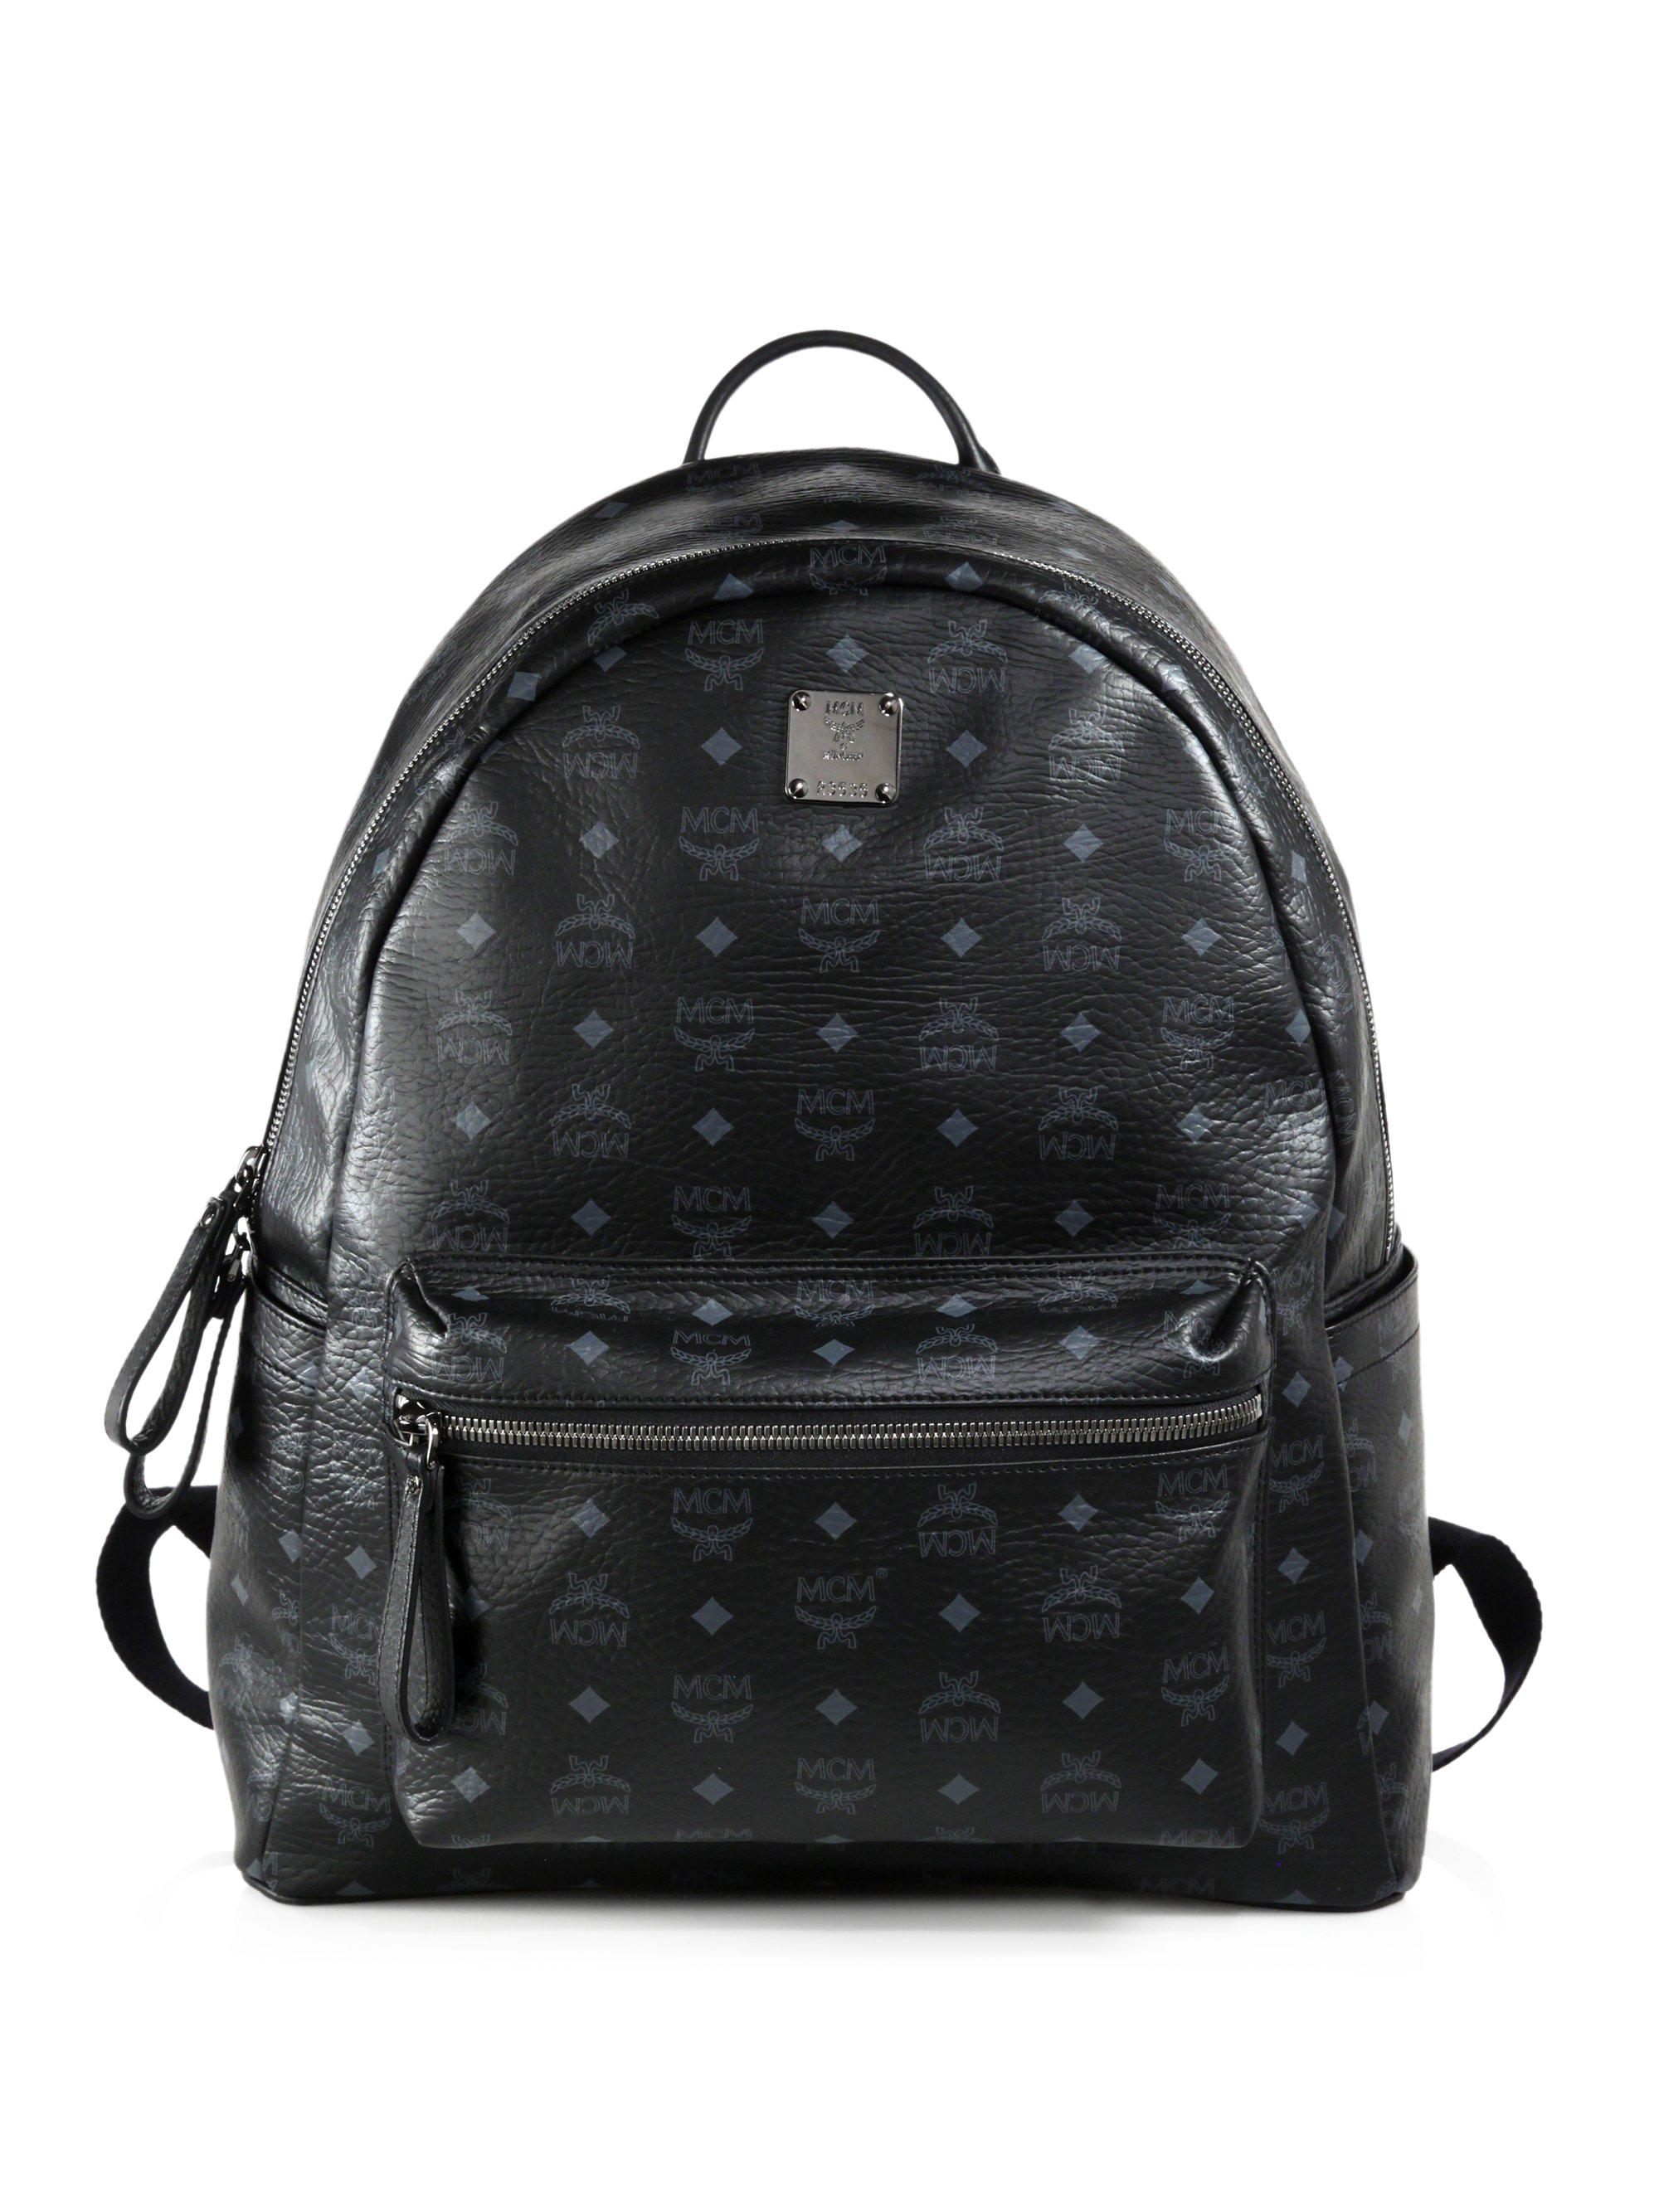 Mcm Stark Backpack in Black for Men - Save 4% | Lyst